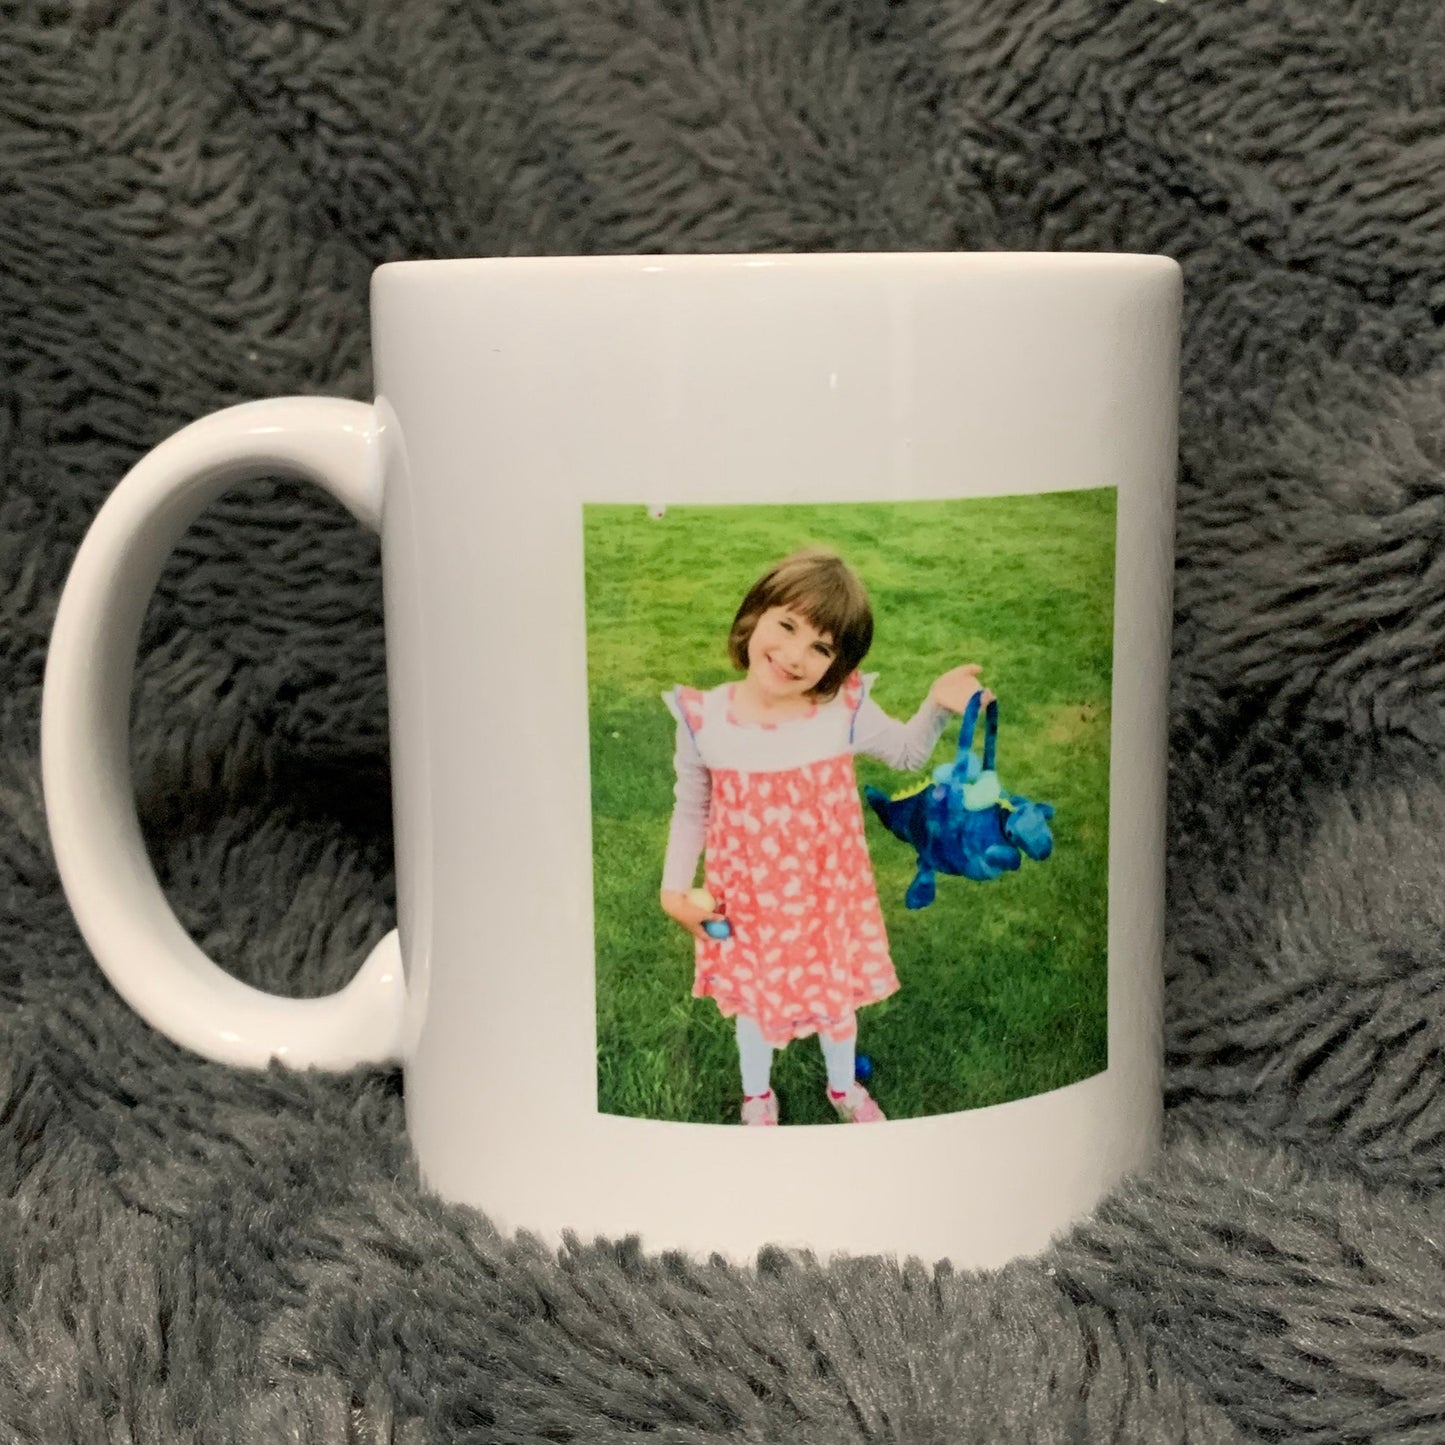 Custom Mugs for Baker Moms Home Decor - Personalized Gift for Women - Mothers Day Gift